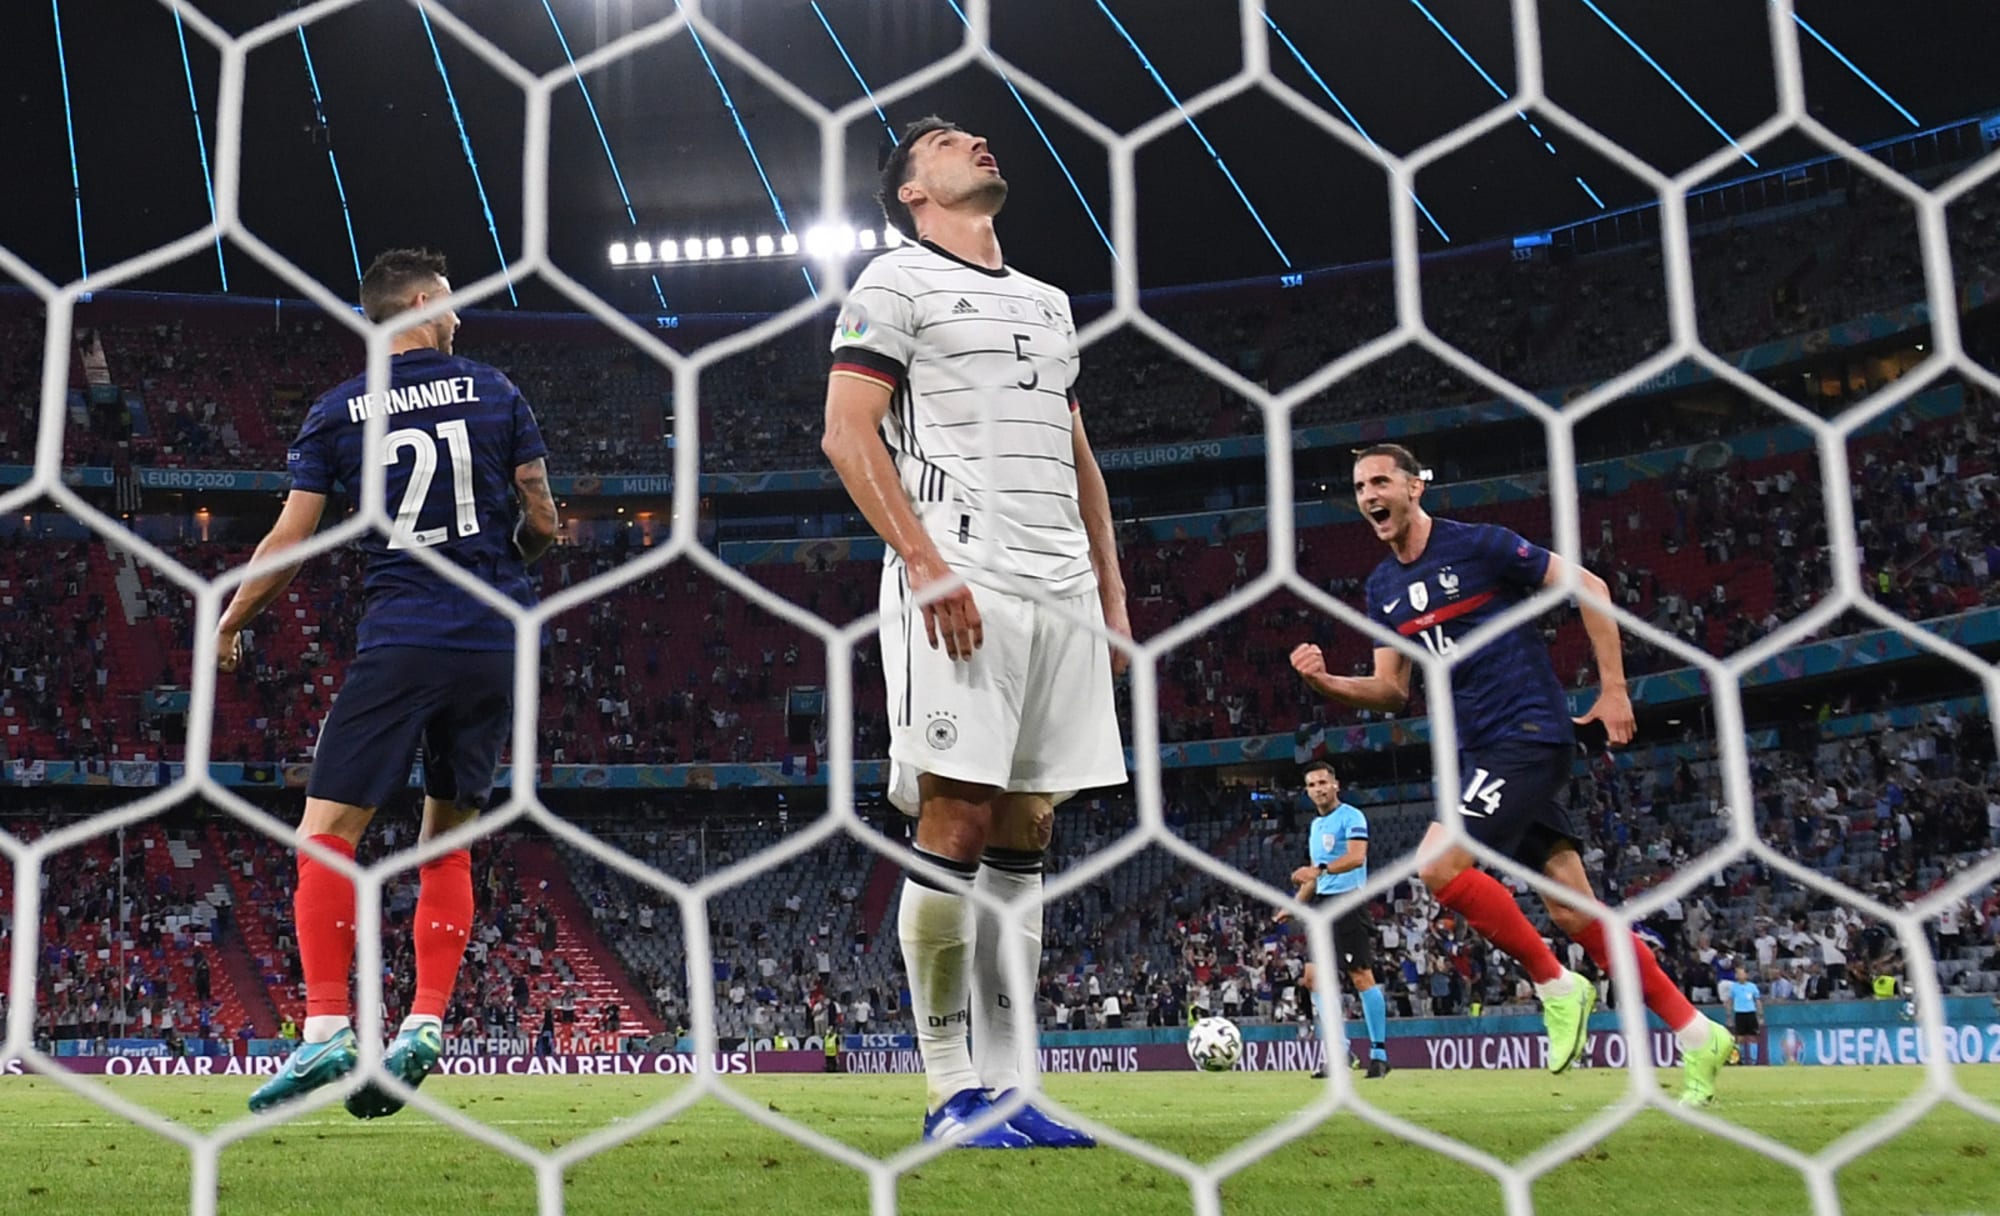 Mats Hummels own goal helps France beat Germany in Euro 2020 opener - Flipboard